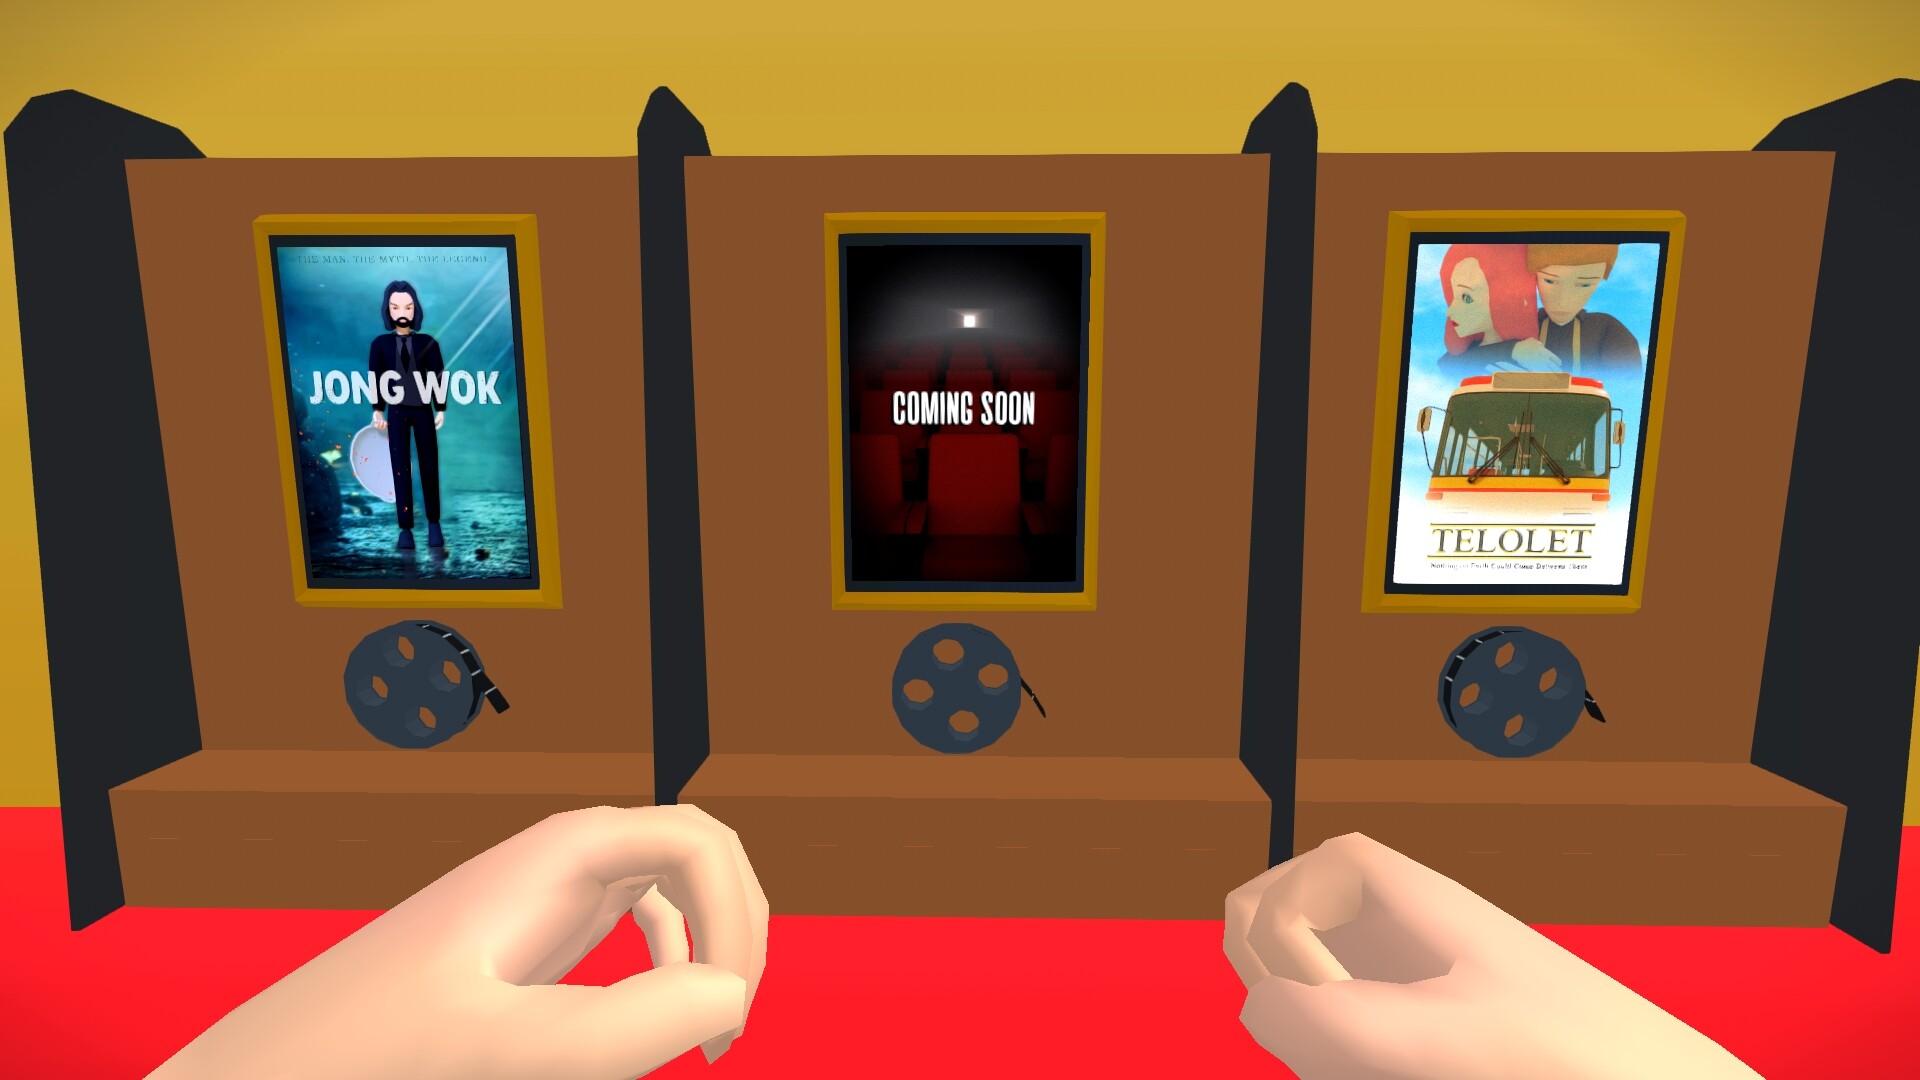 电影院模拟器|官方英文|Movie Cinema Simulator插图4